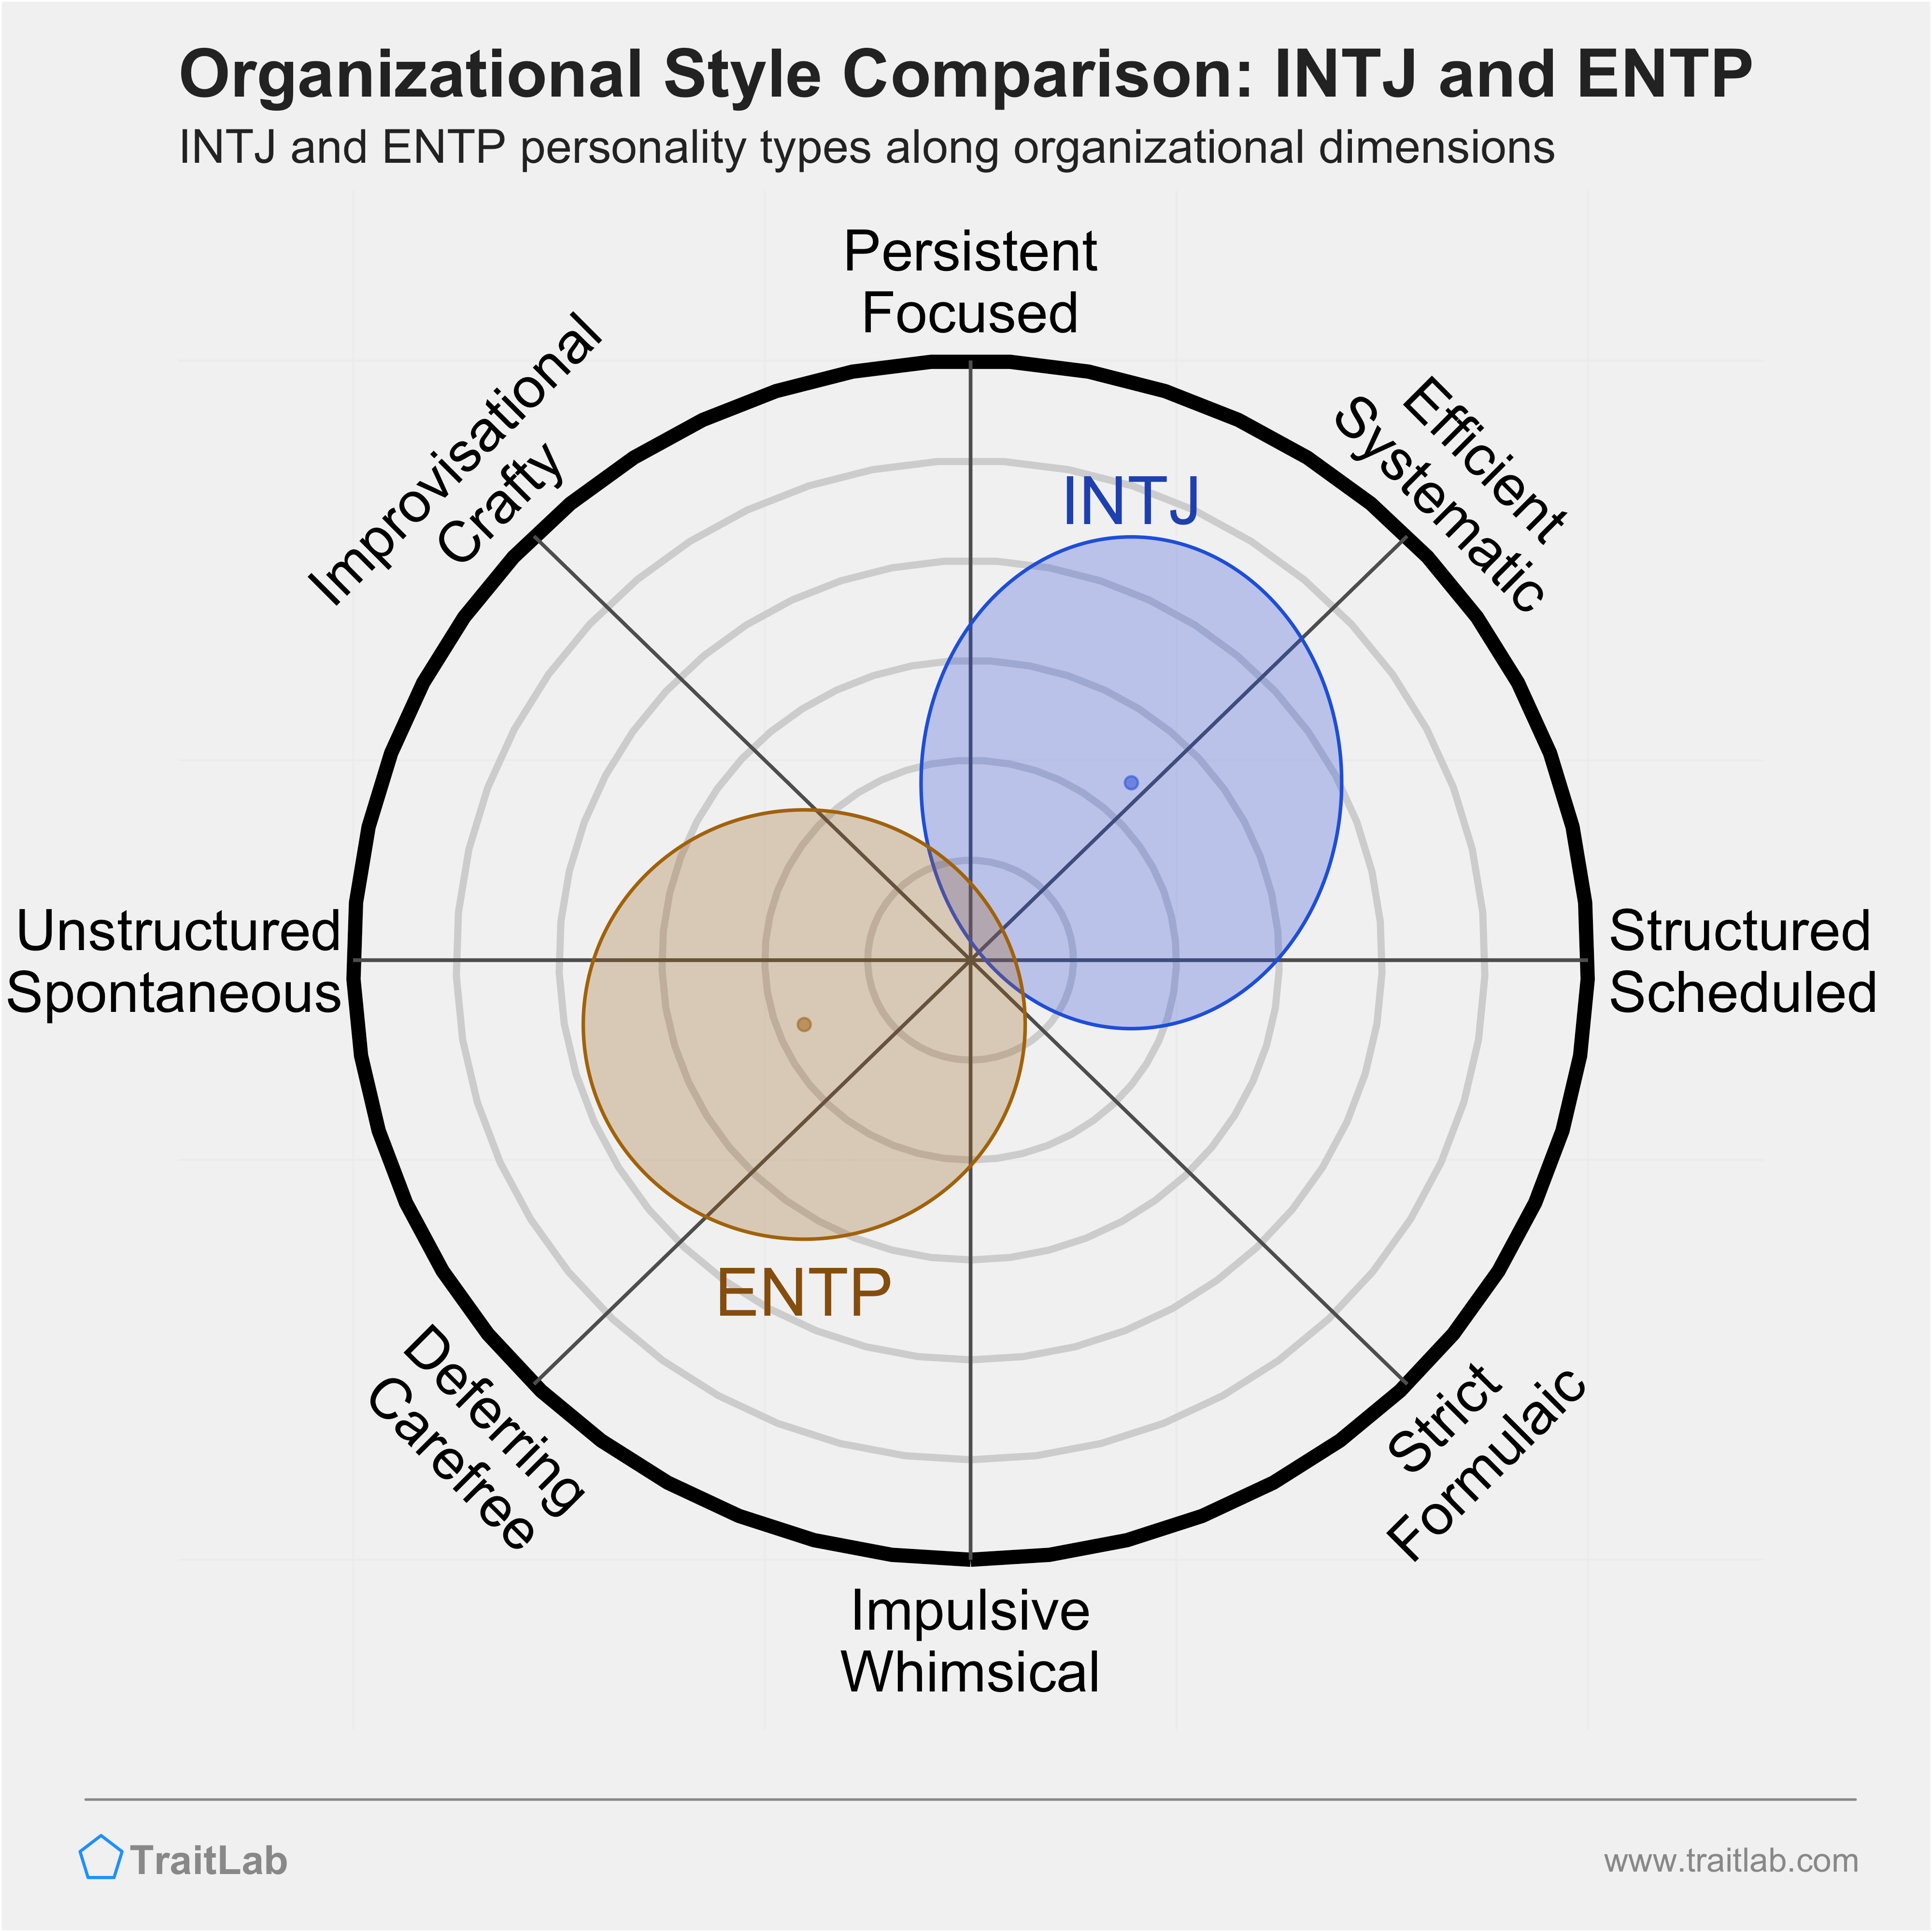 INTJ and ENTP comparison across organizational dimensions